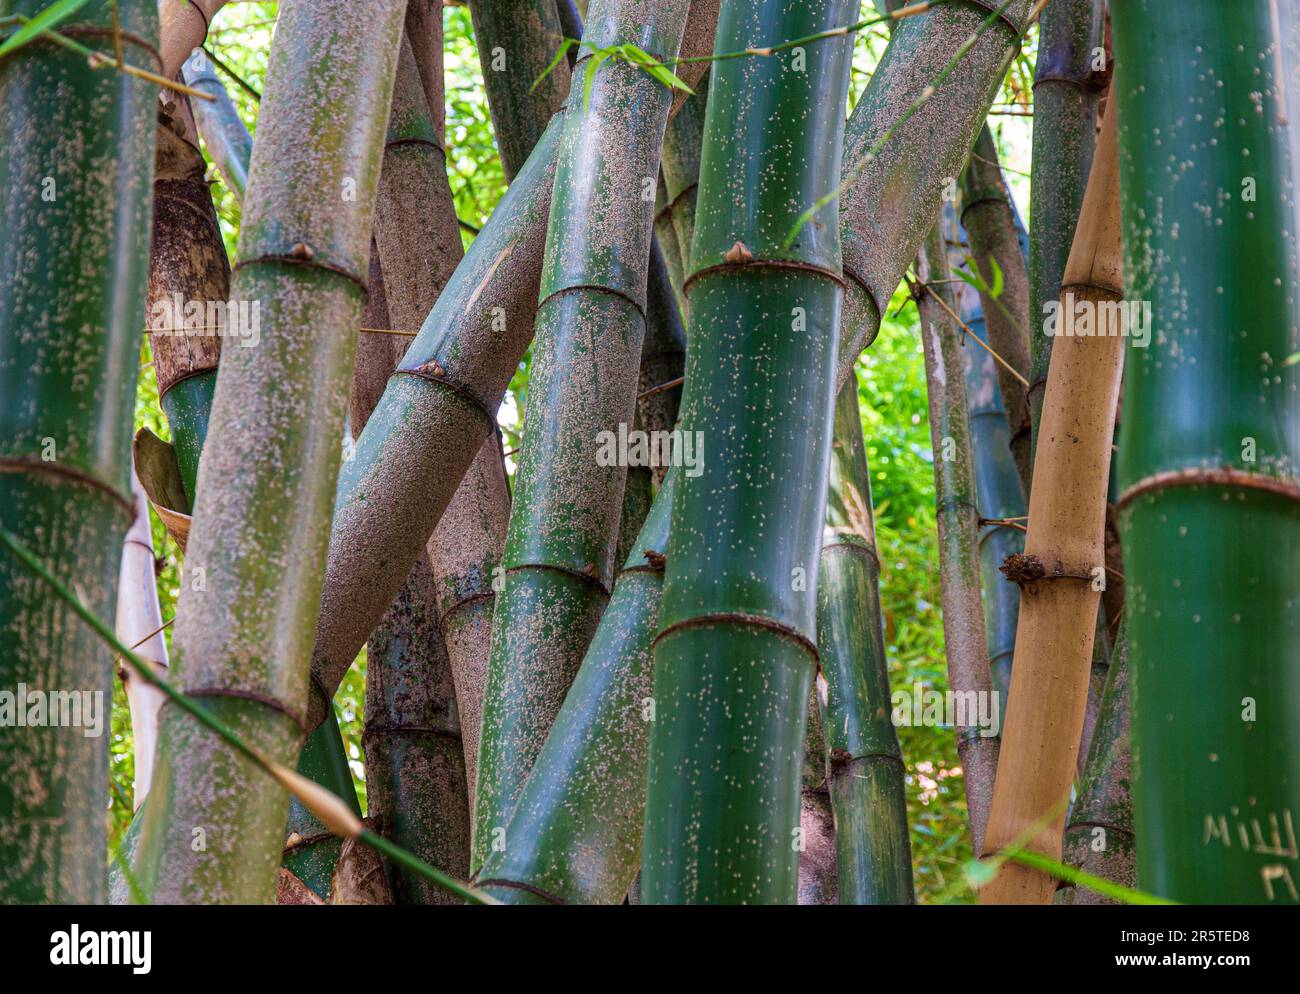 Bamboo jardin Botanico Valencia, Espagne Banque D'Images